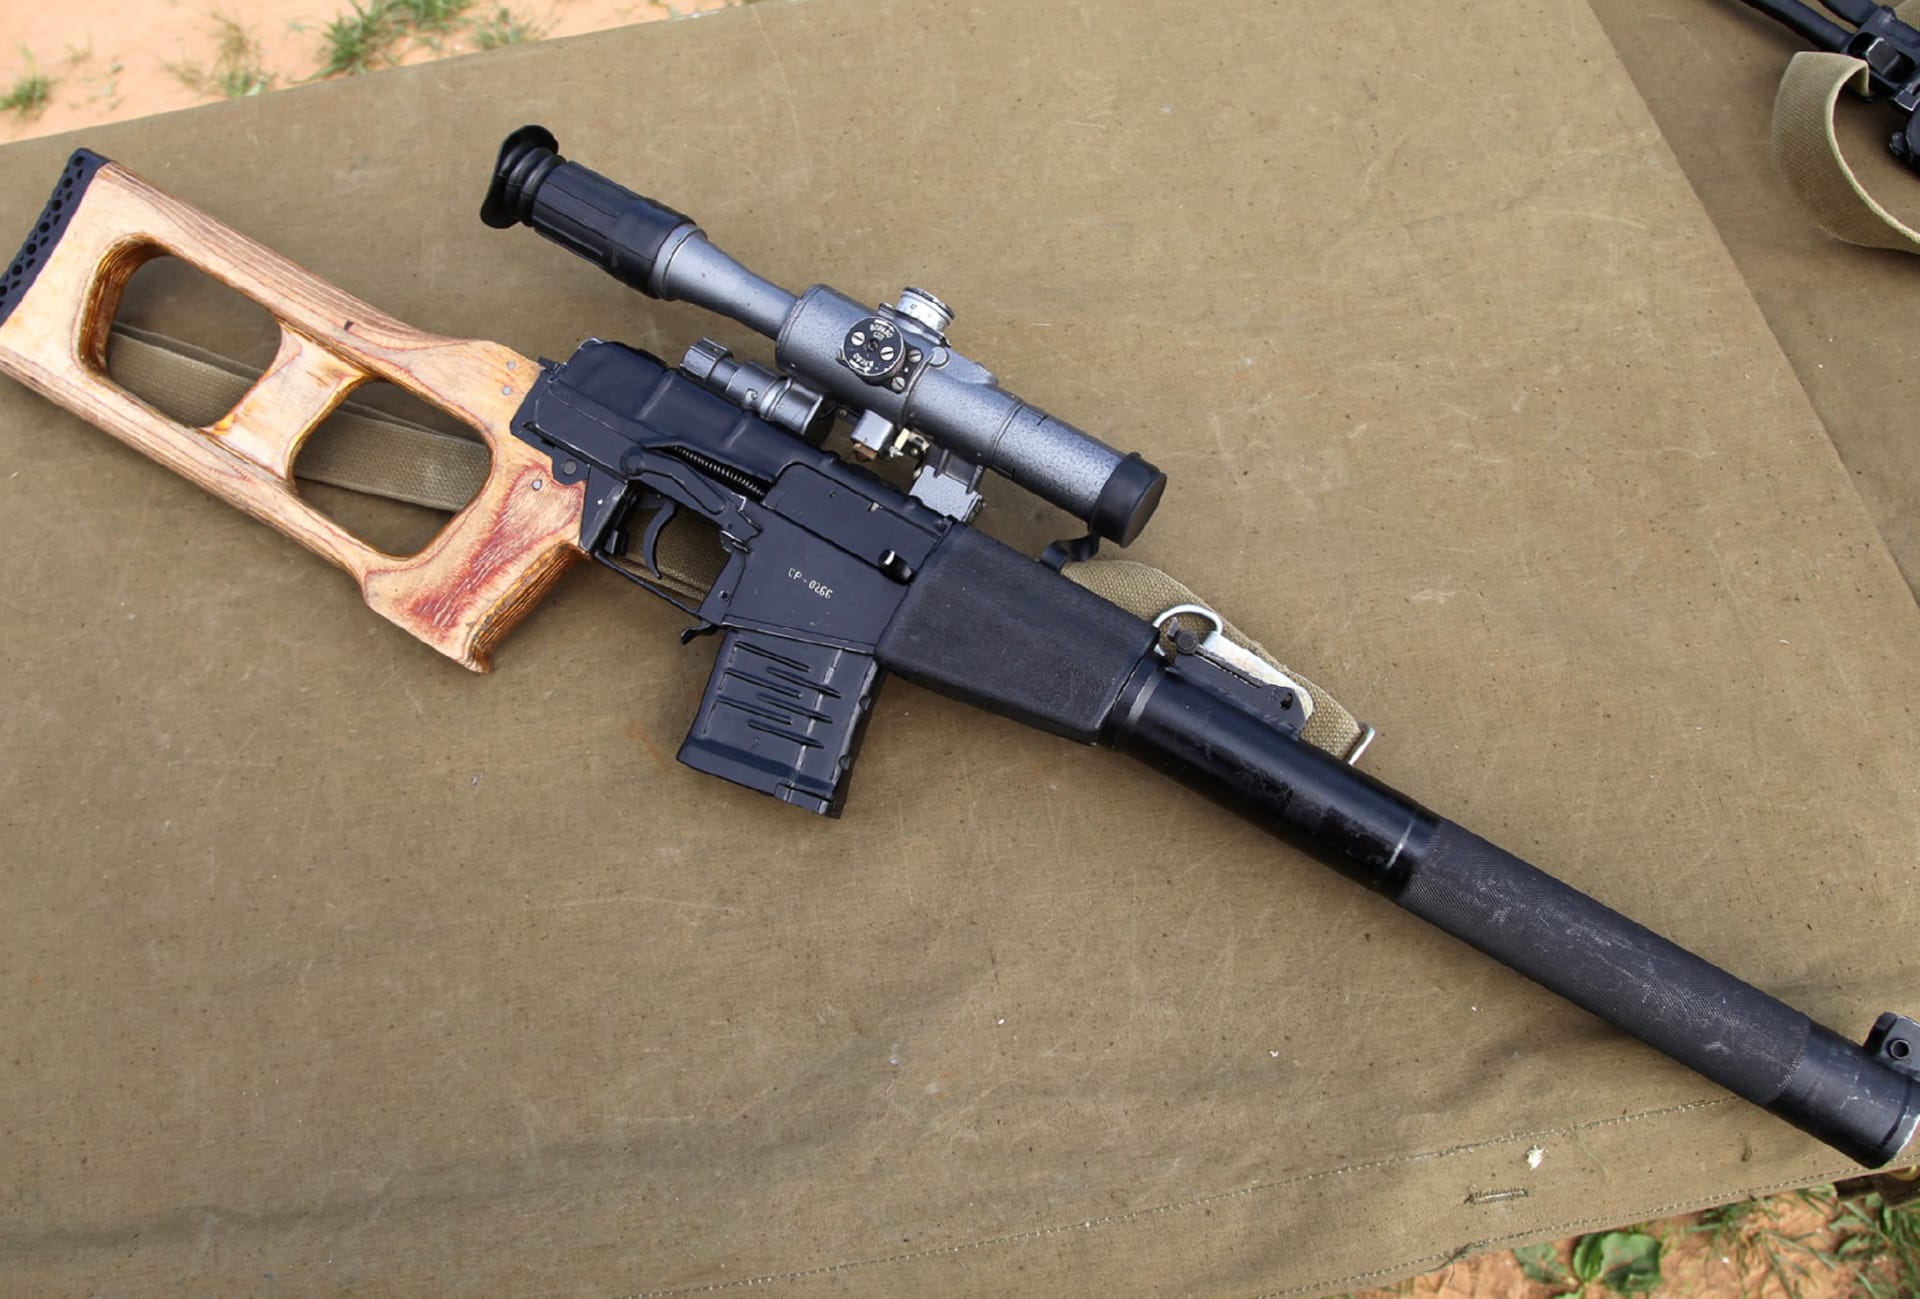 VSS Vintorez sniper rifle at 1152 x 864 size wallpapers HD quality